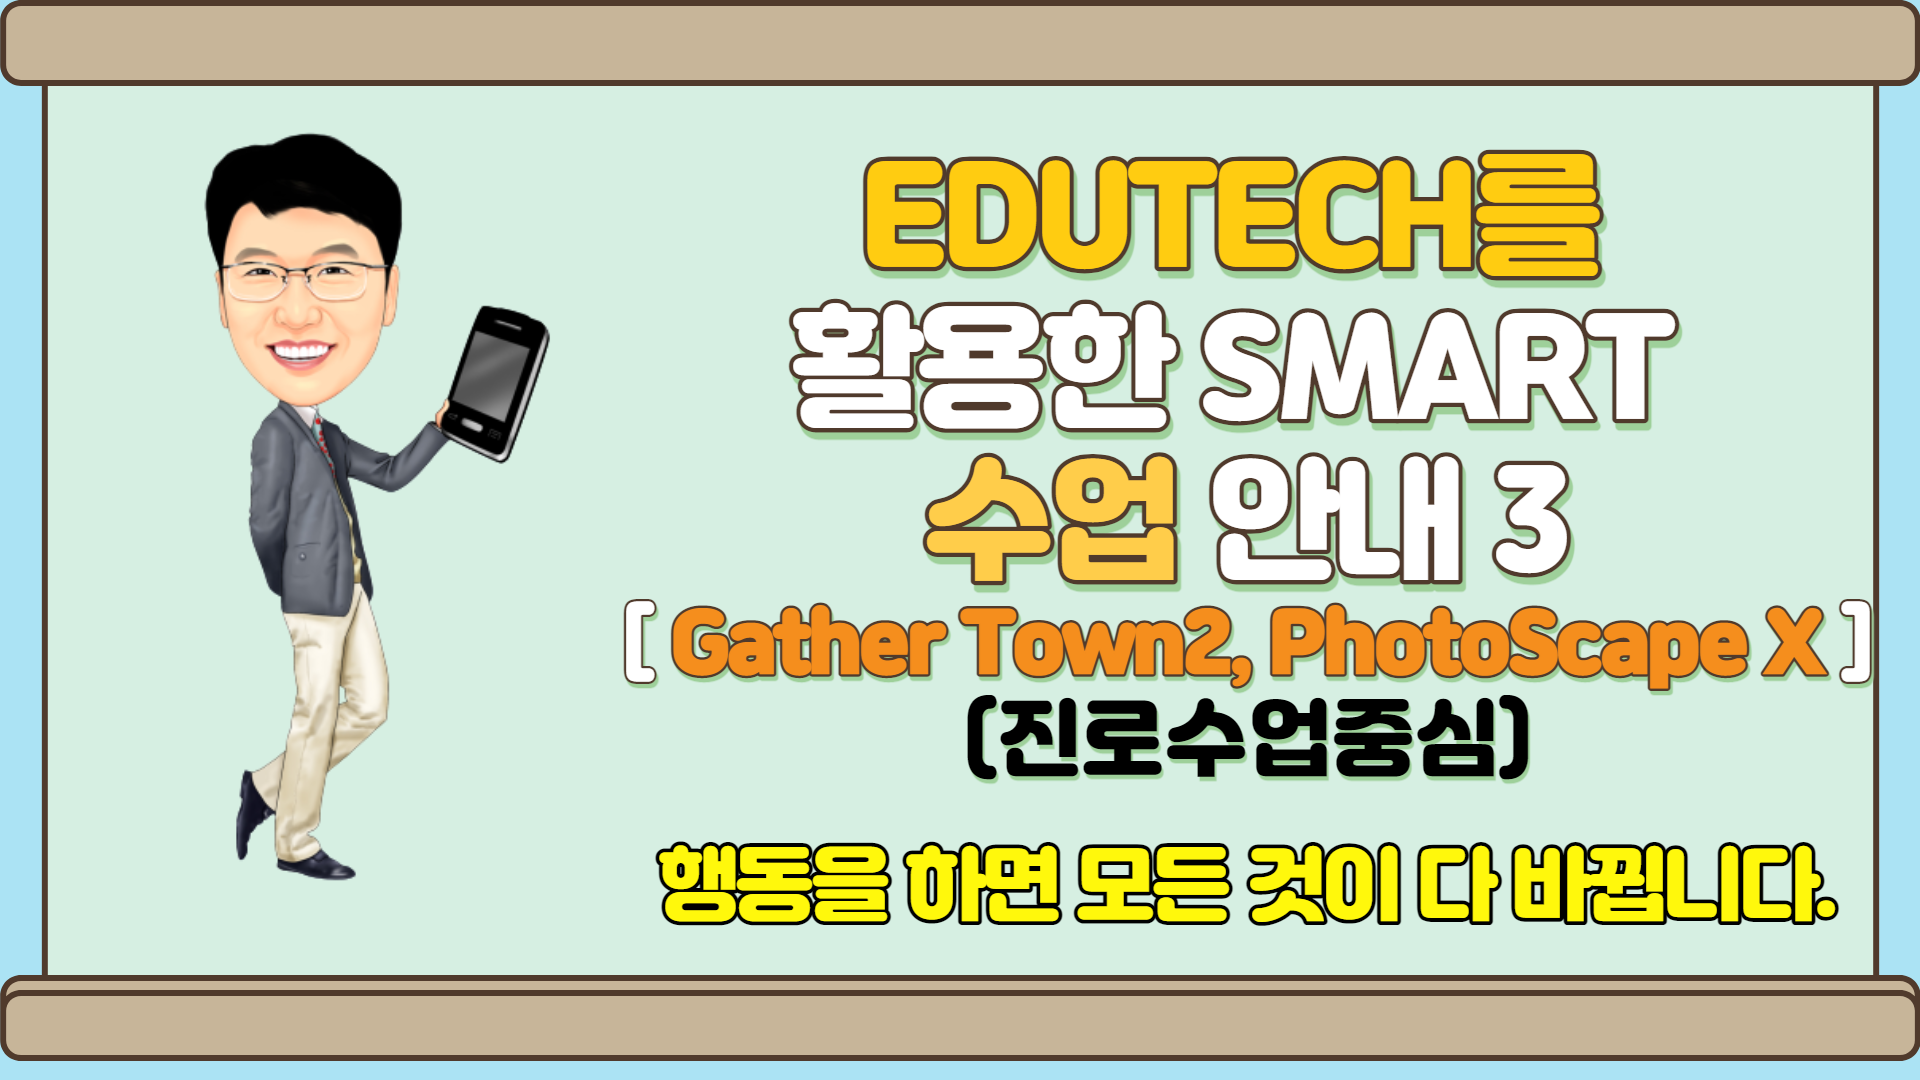 EDUTECH를 활용한 smart 수업 방법 안내 3(진로수업을 중심으로) (GATHET TOWN-2)  19:00~20:50